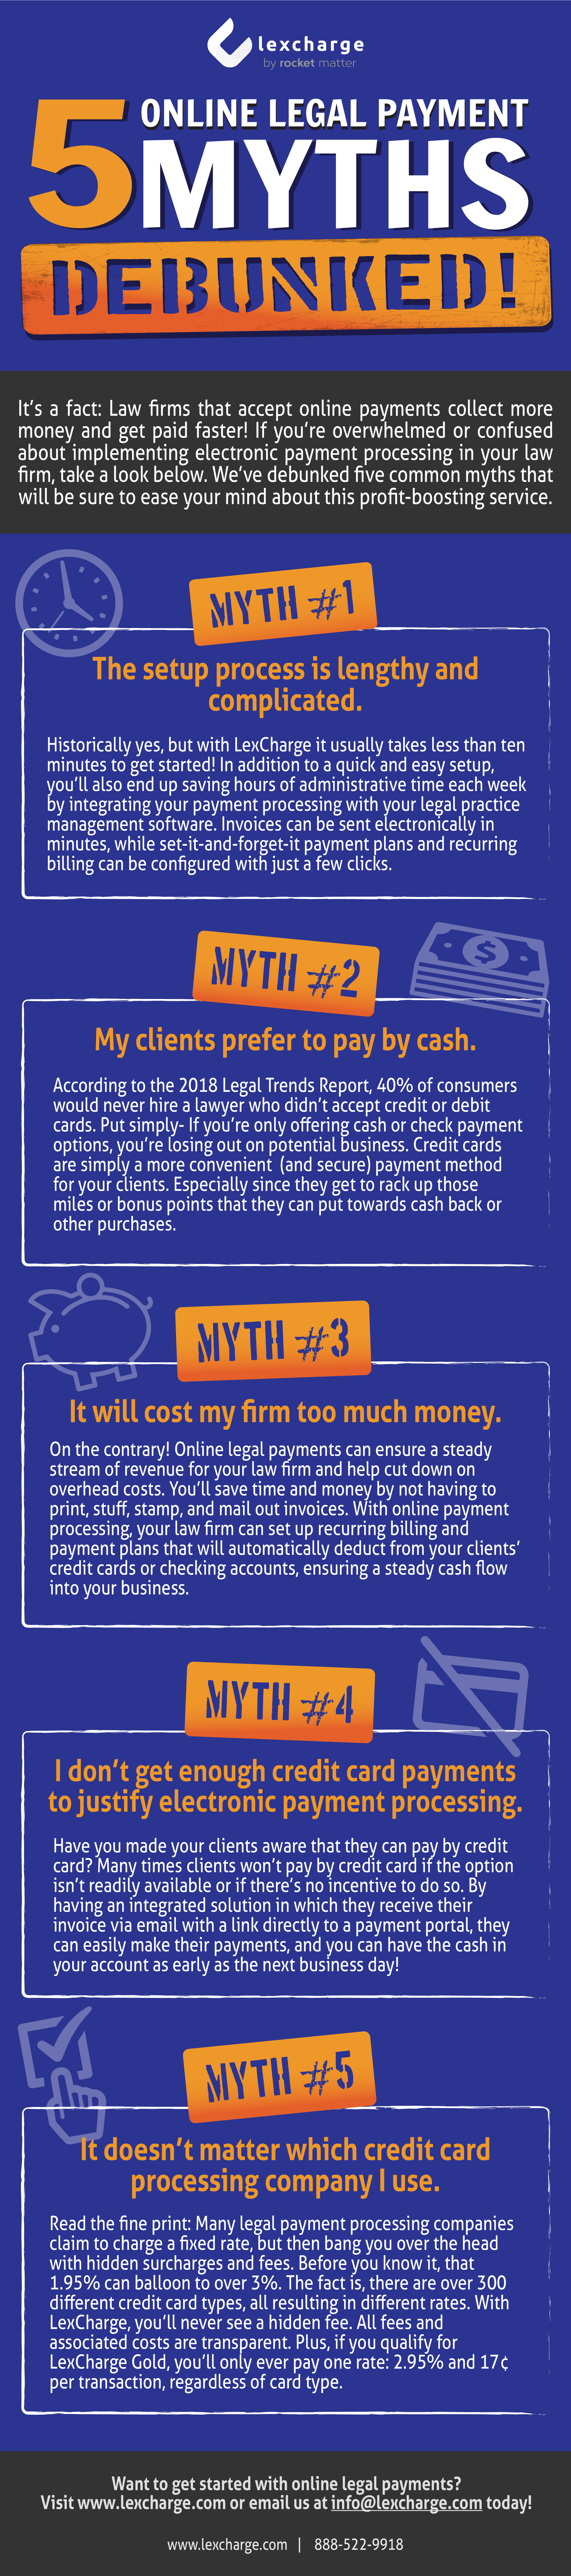 online-legal-payments-myths-01